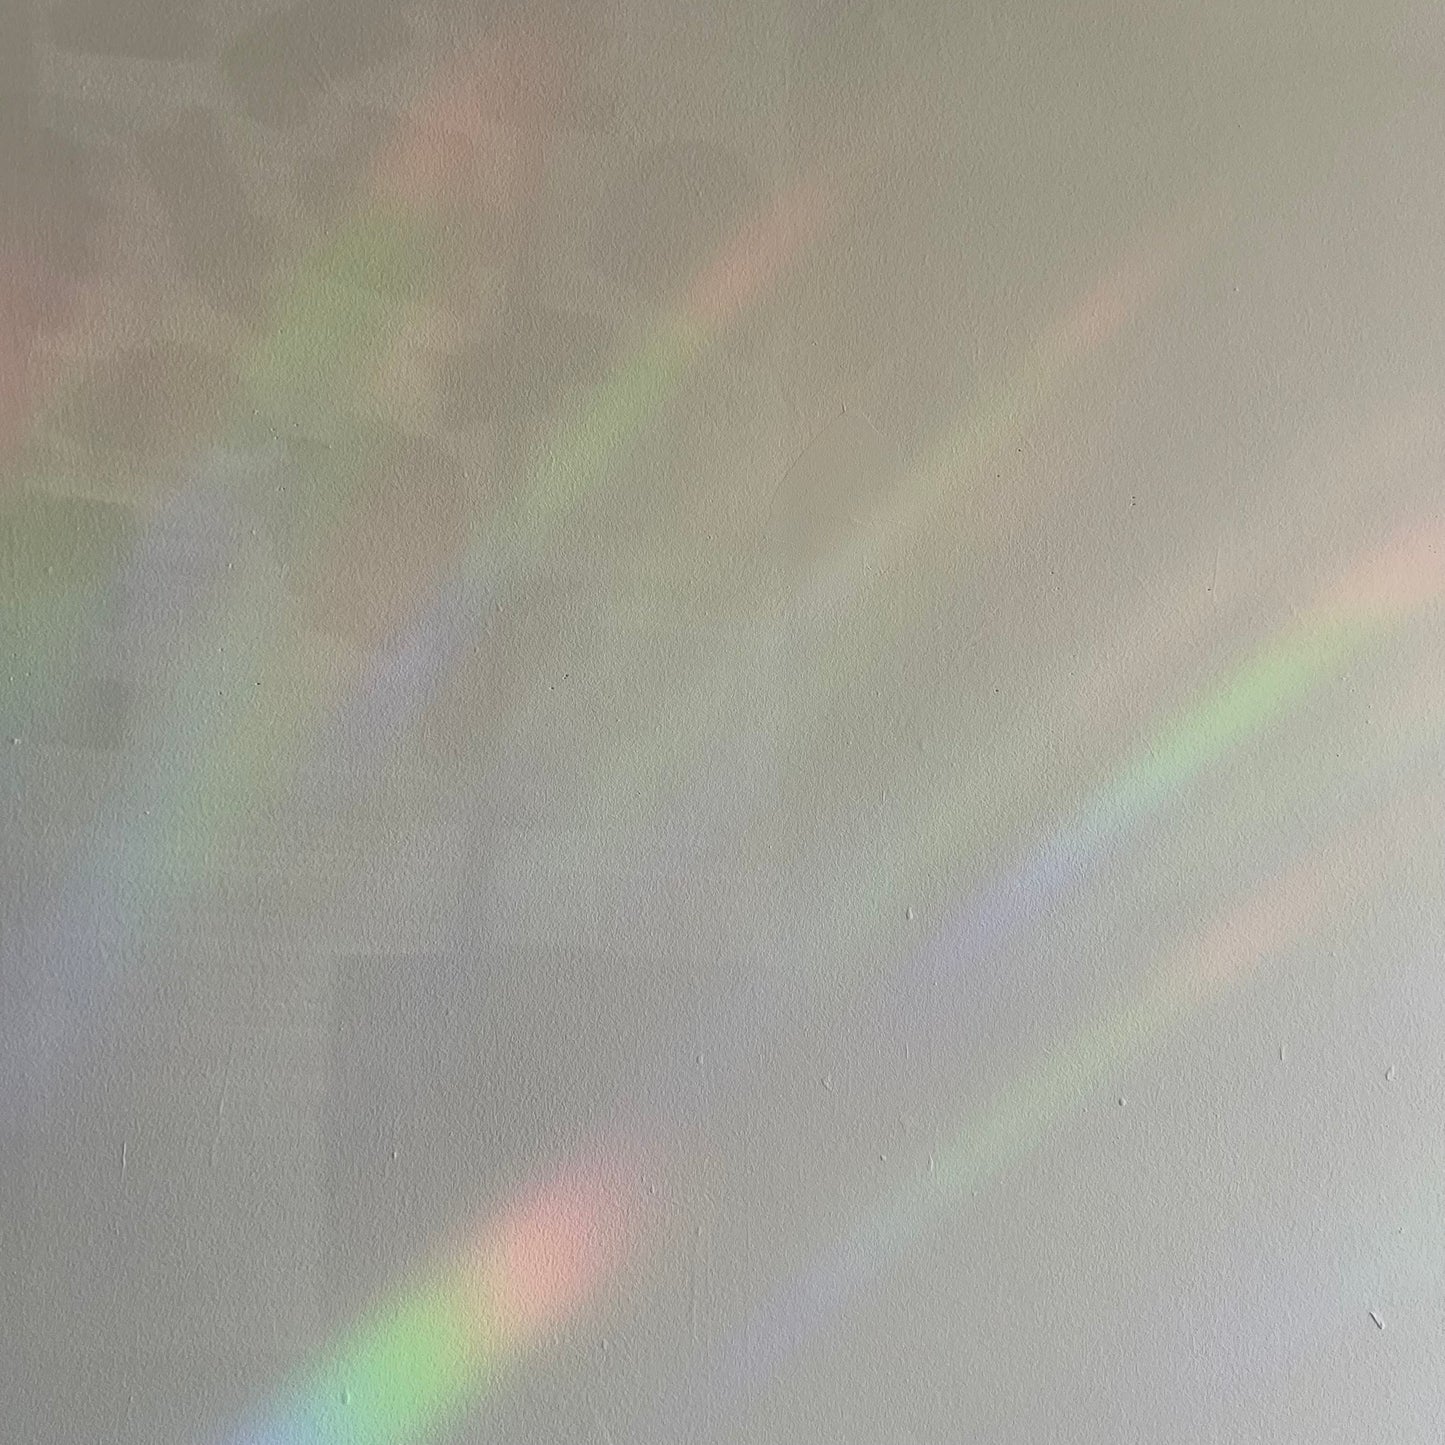 Create Your Own Luck Suncatcher Rainbow Window Decal